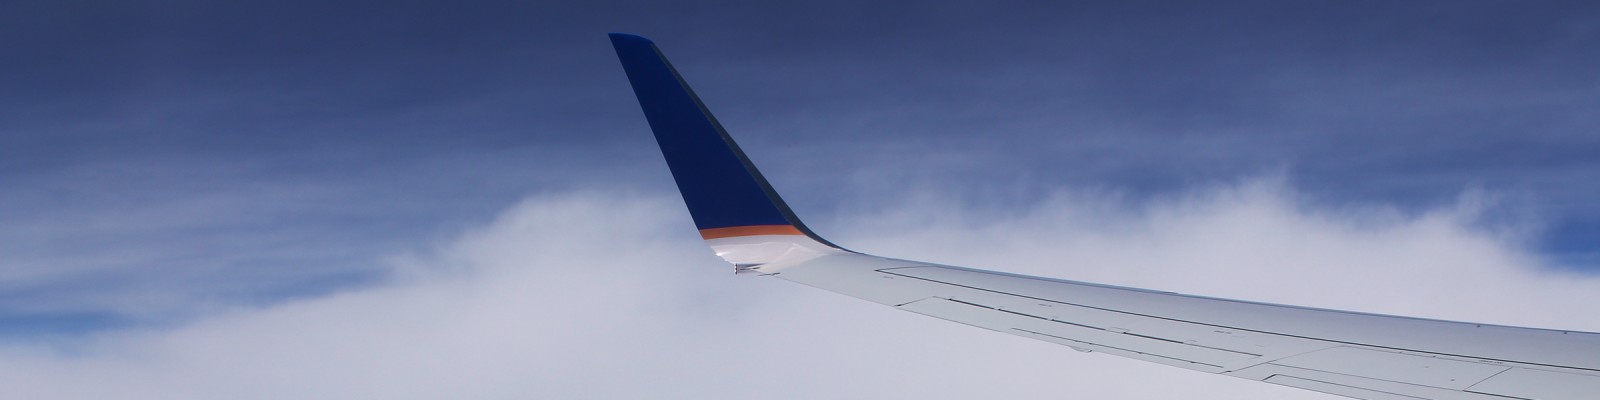 Passagierflugzeug mit Winglets